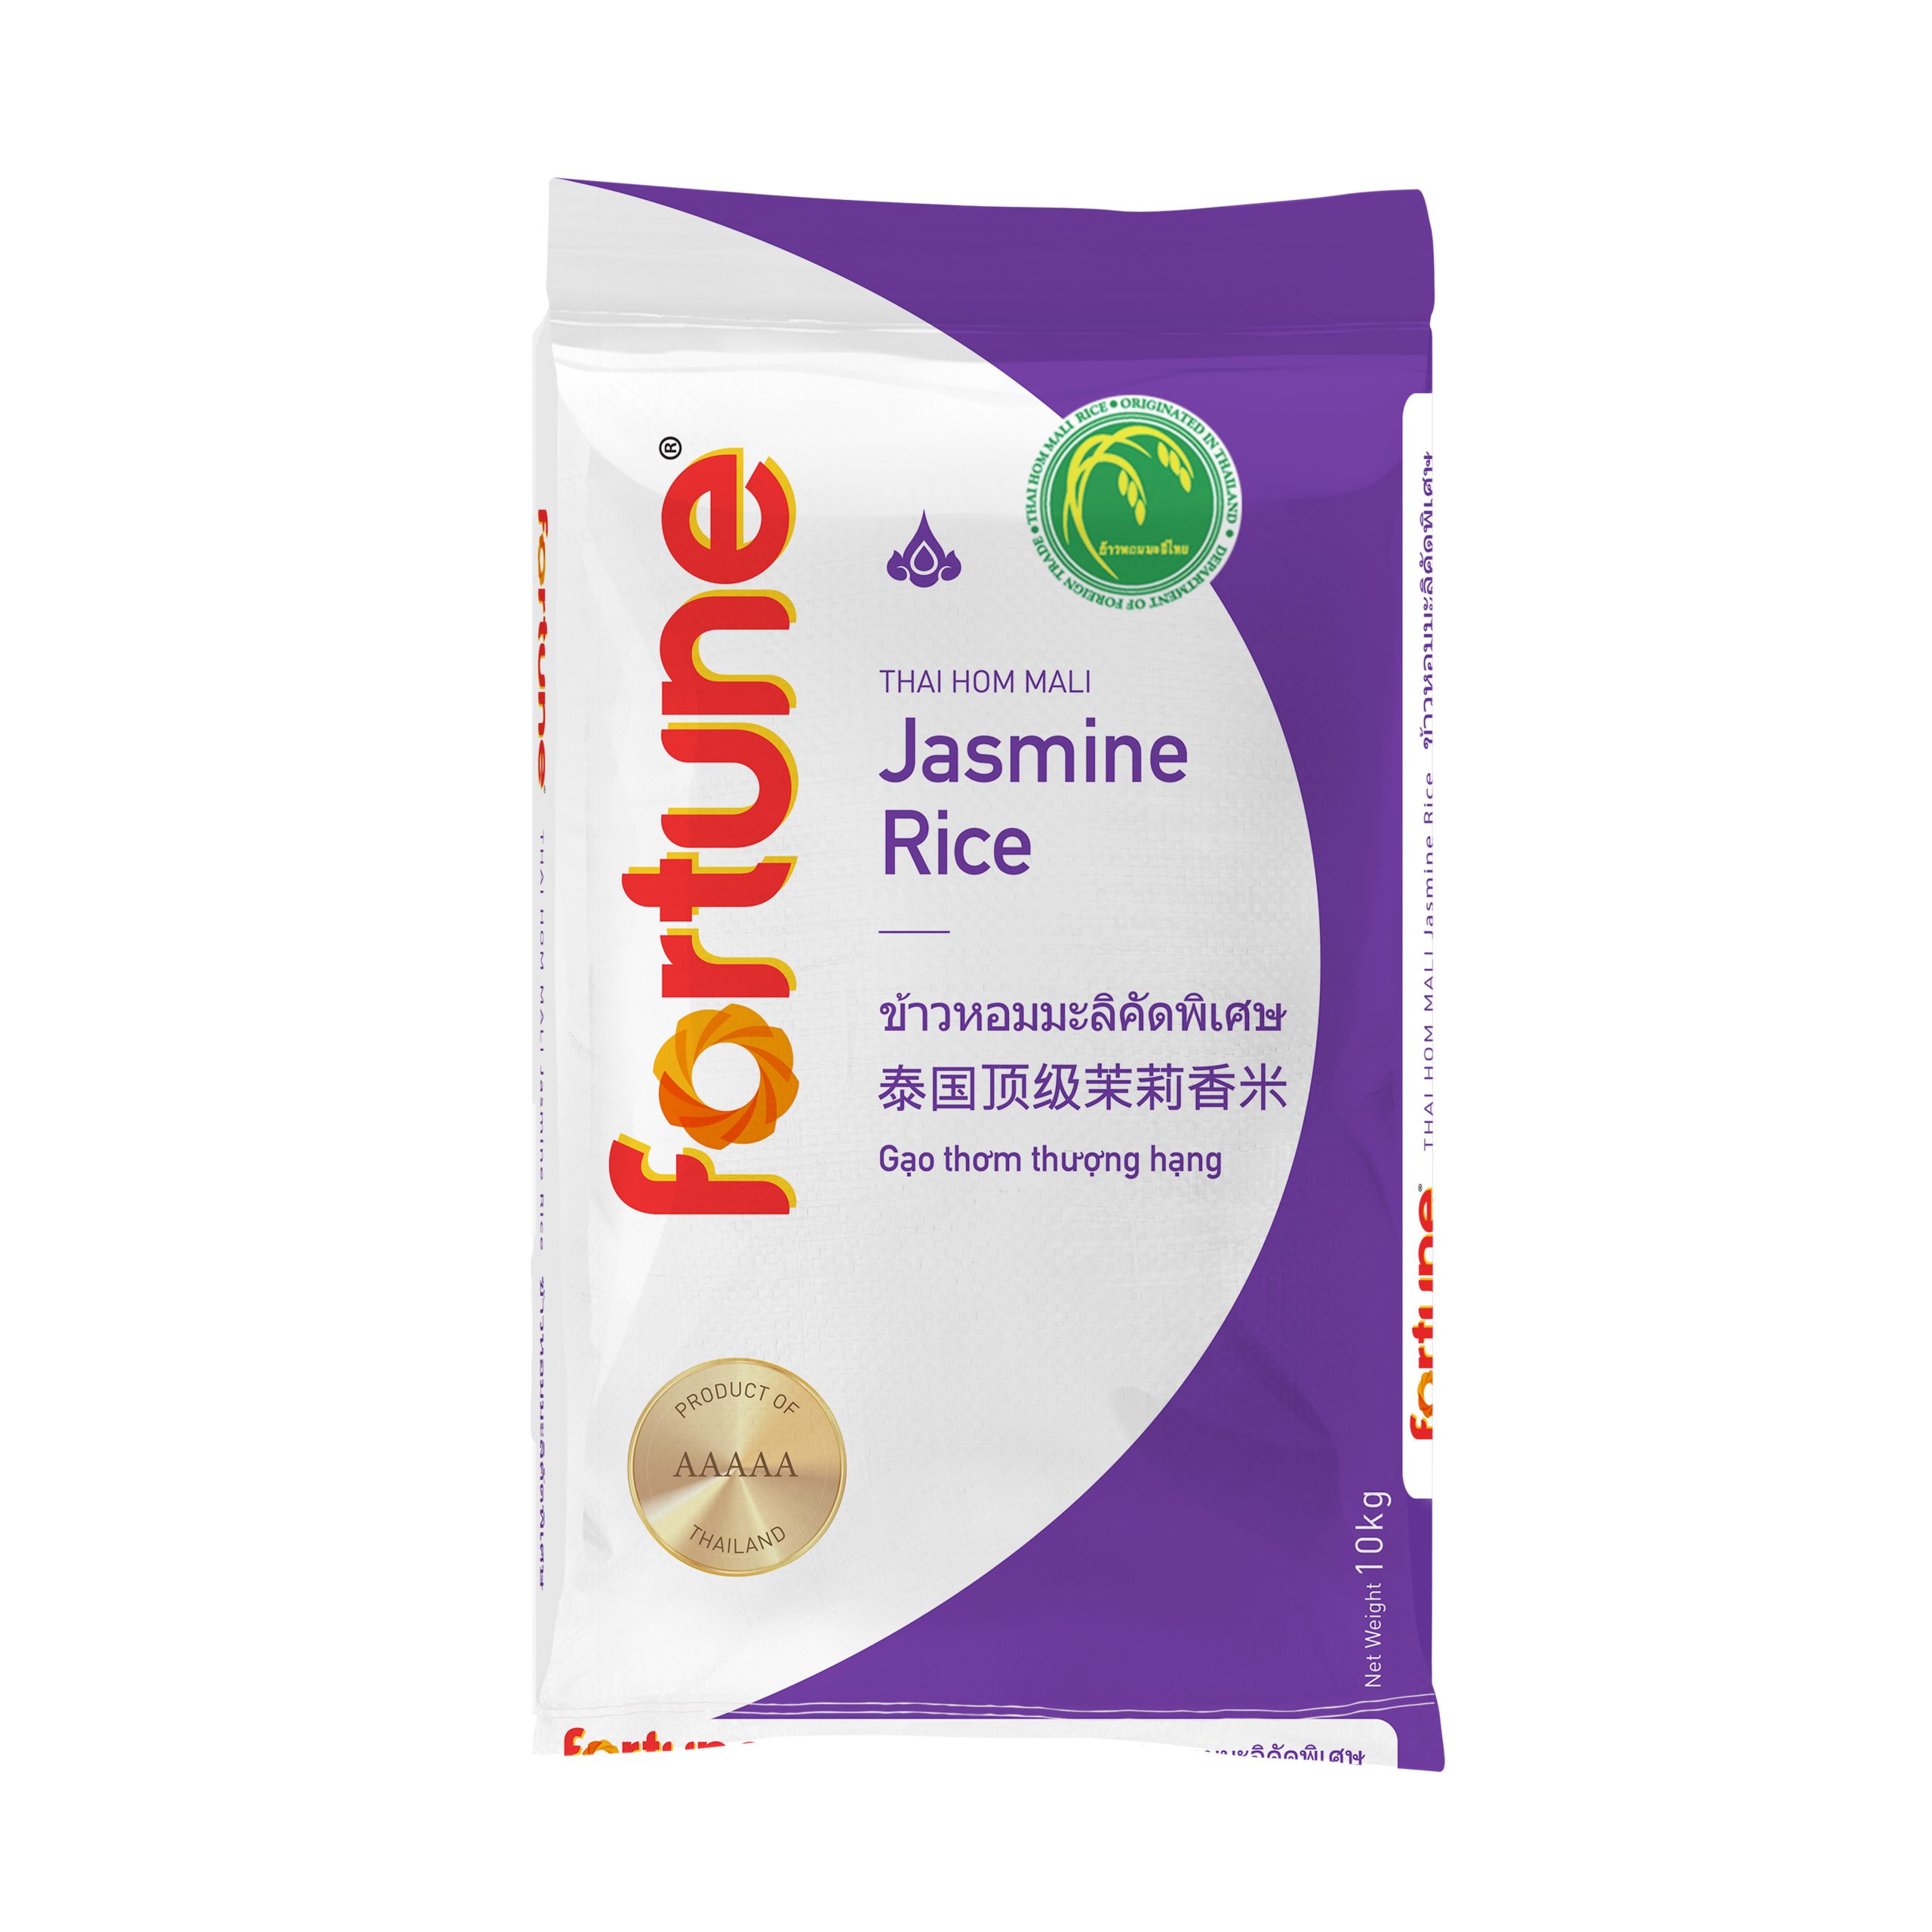 GOO13792 Fortune Branded Collateral (Renders) Jasmine Rice 10kg Final